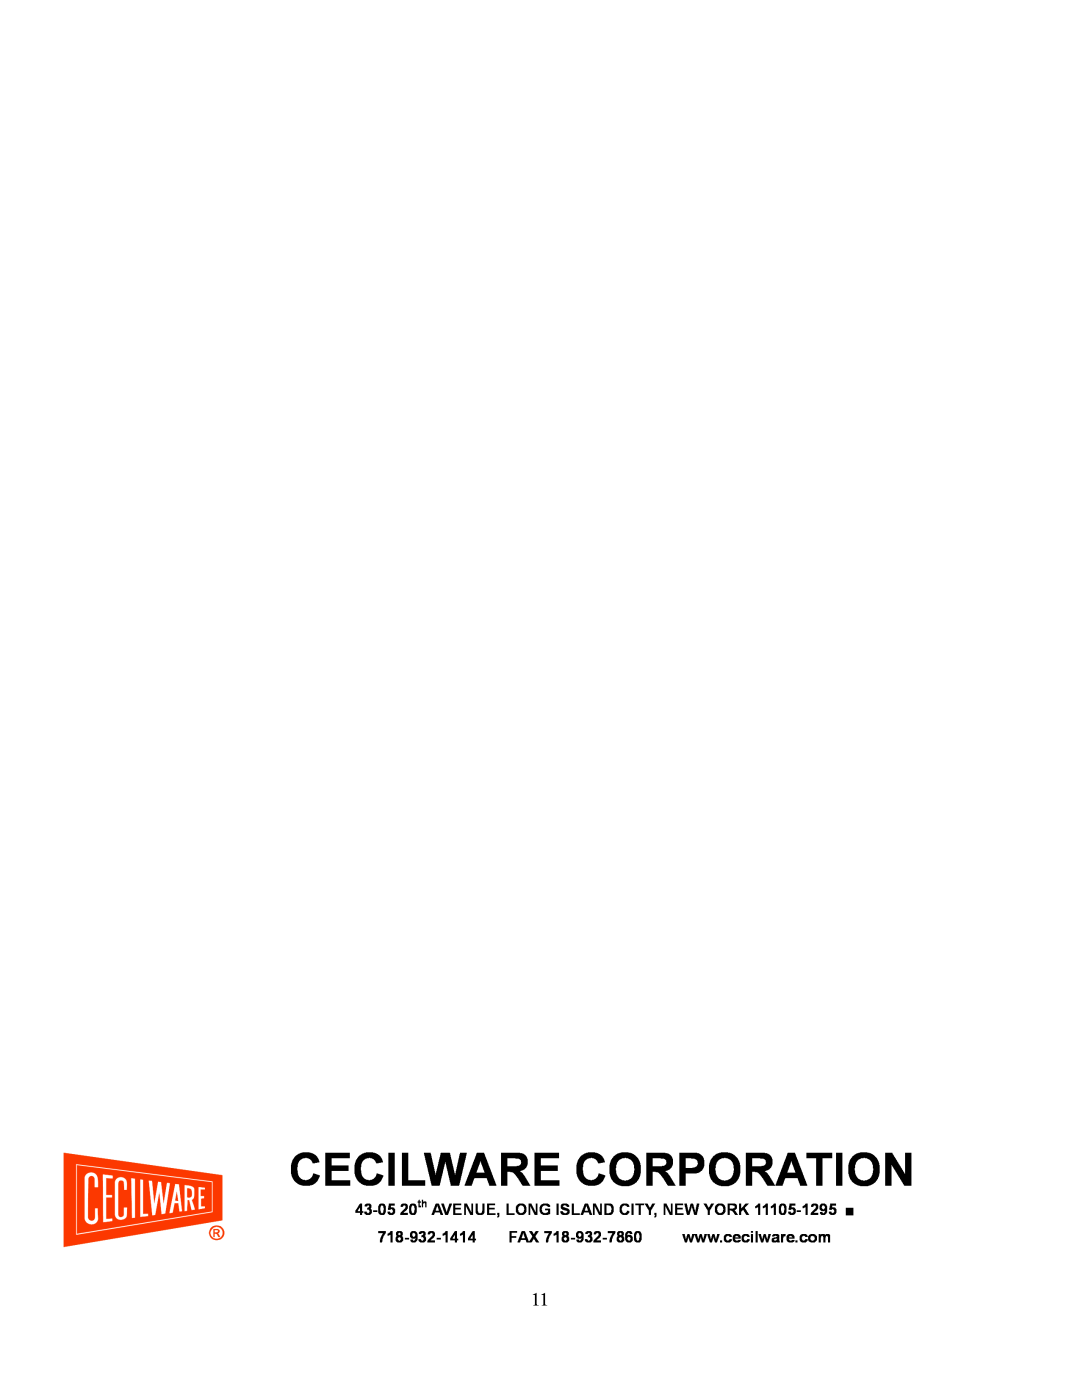 Cecilware EL-2x6, EL-2x15, EL-25, EL-2x25, EL-15, EL-6 Cecilware Corporation, 43-0520th AVENUE, LONG ISLAND CITY, NEW YORK 